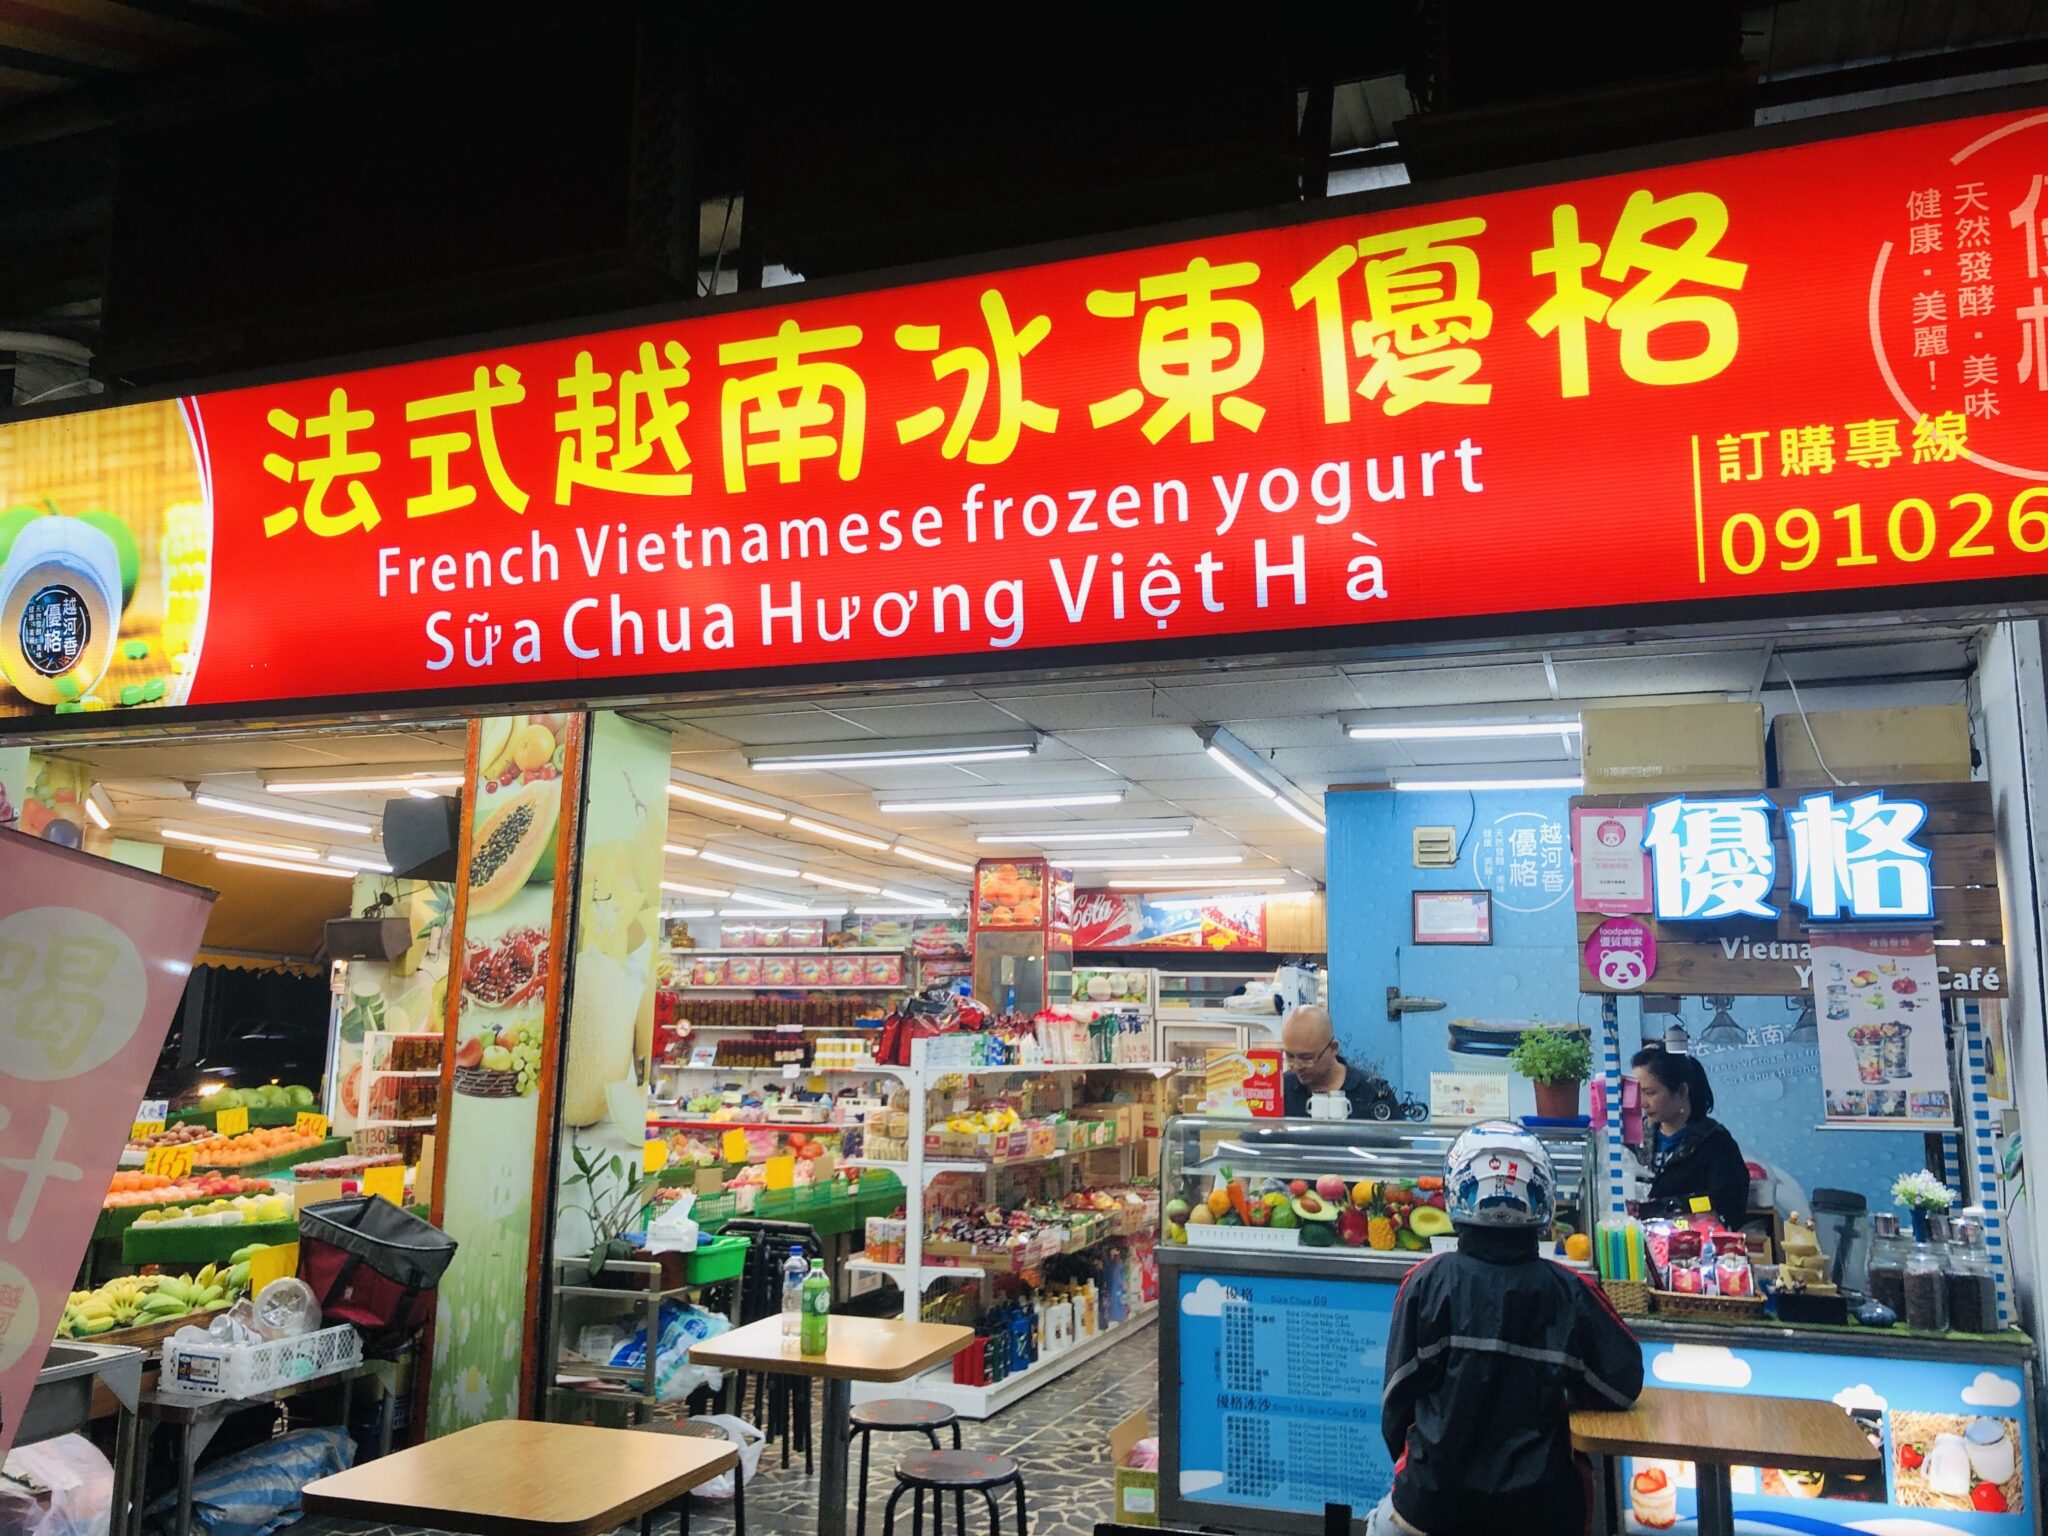 A new resident from Vietnam set up a "French Vietnamese Frozen Yogurt" business in Zhongli, Taoyuan. (Photo / Provided by Fan Jin He)